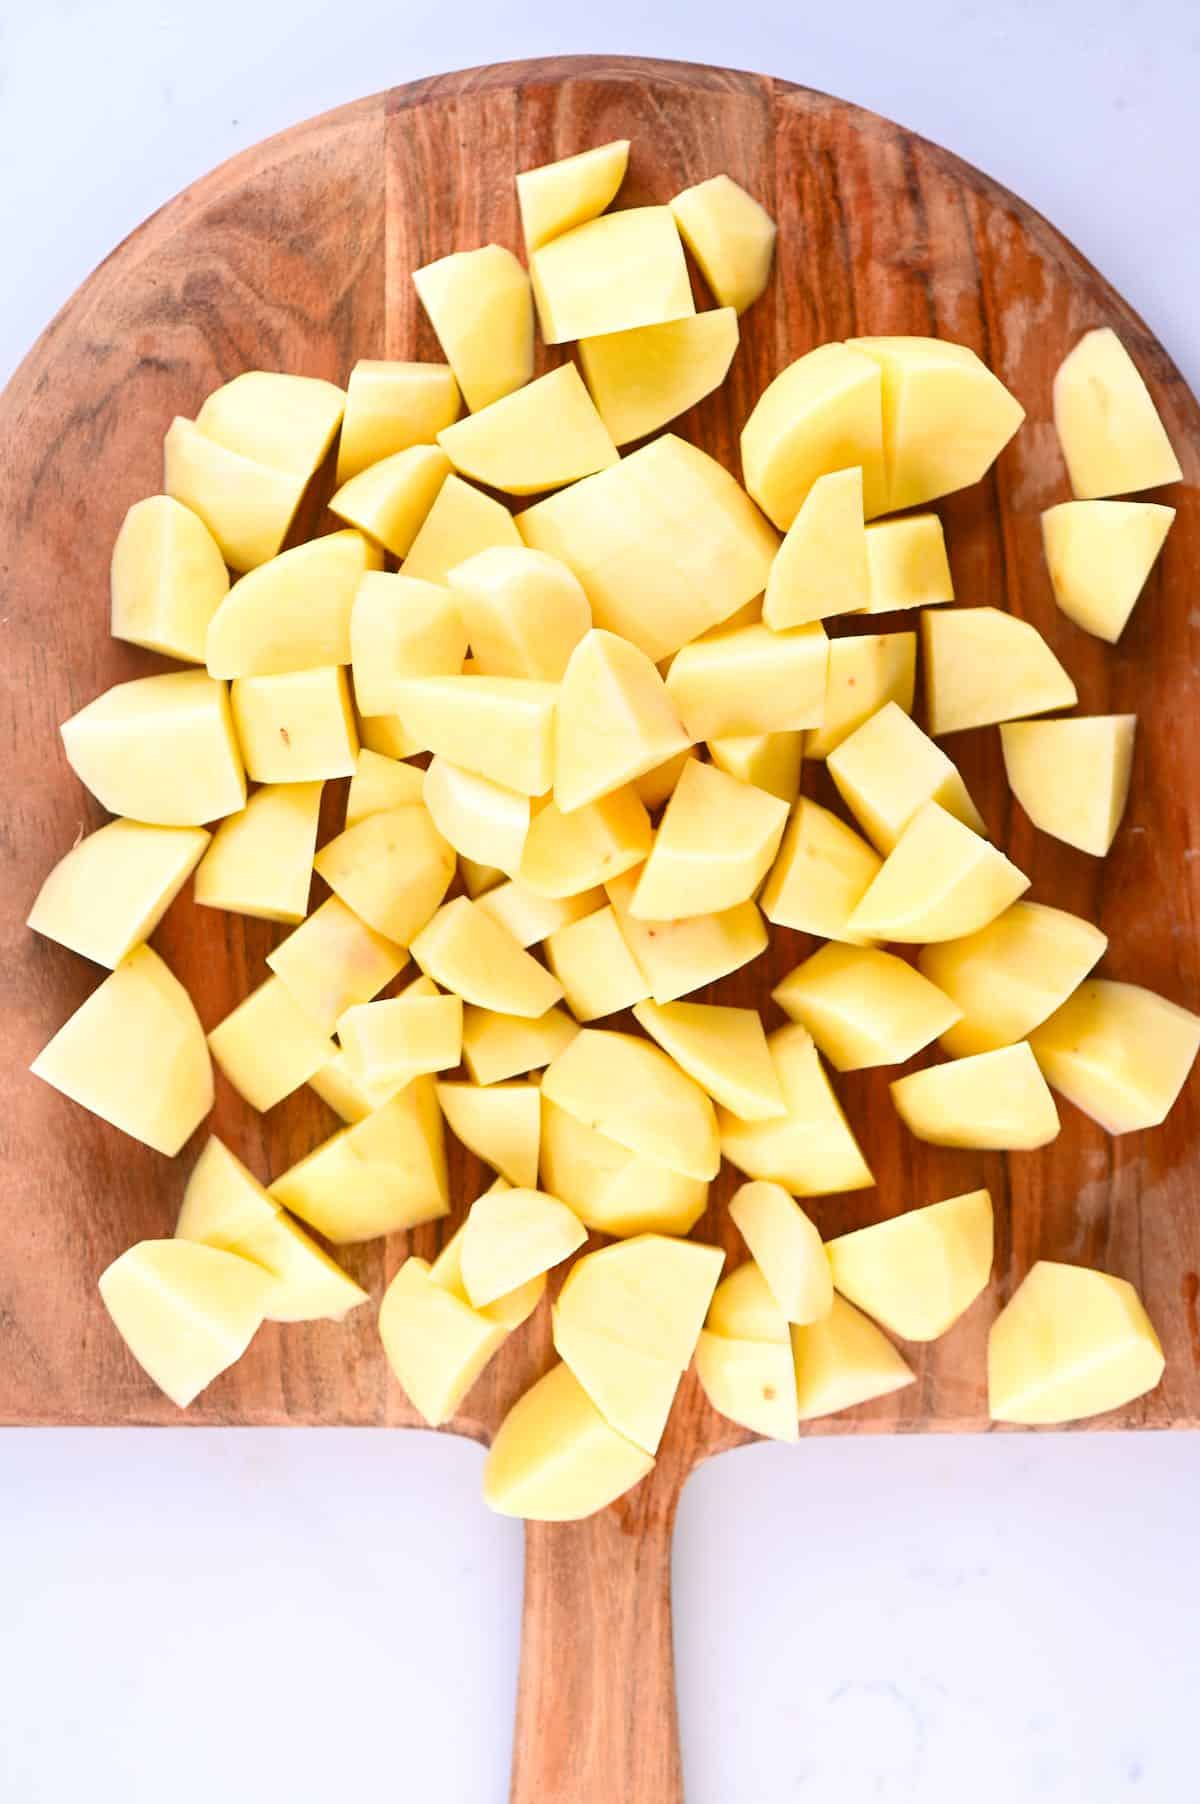 Chopped potatoes on a cutting board